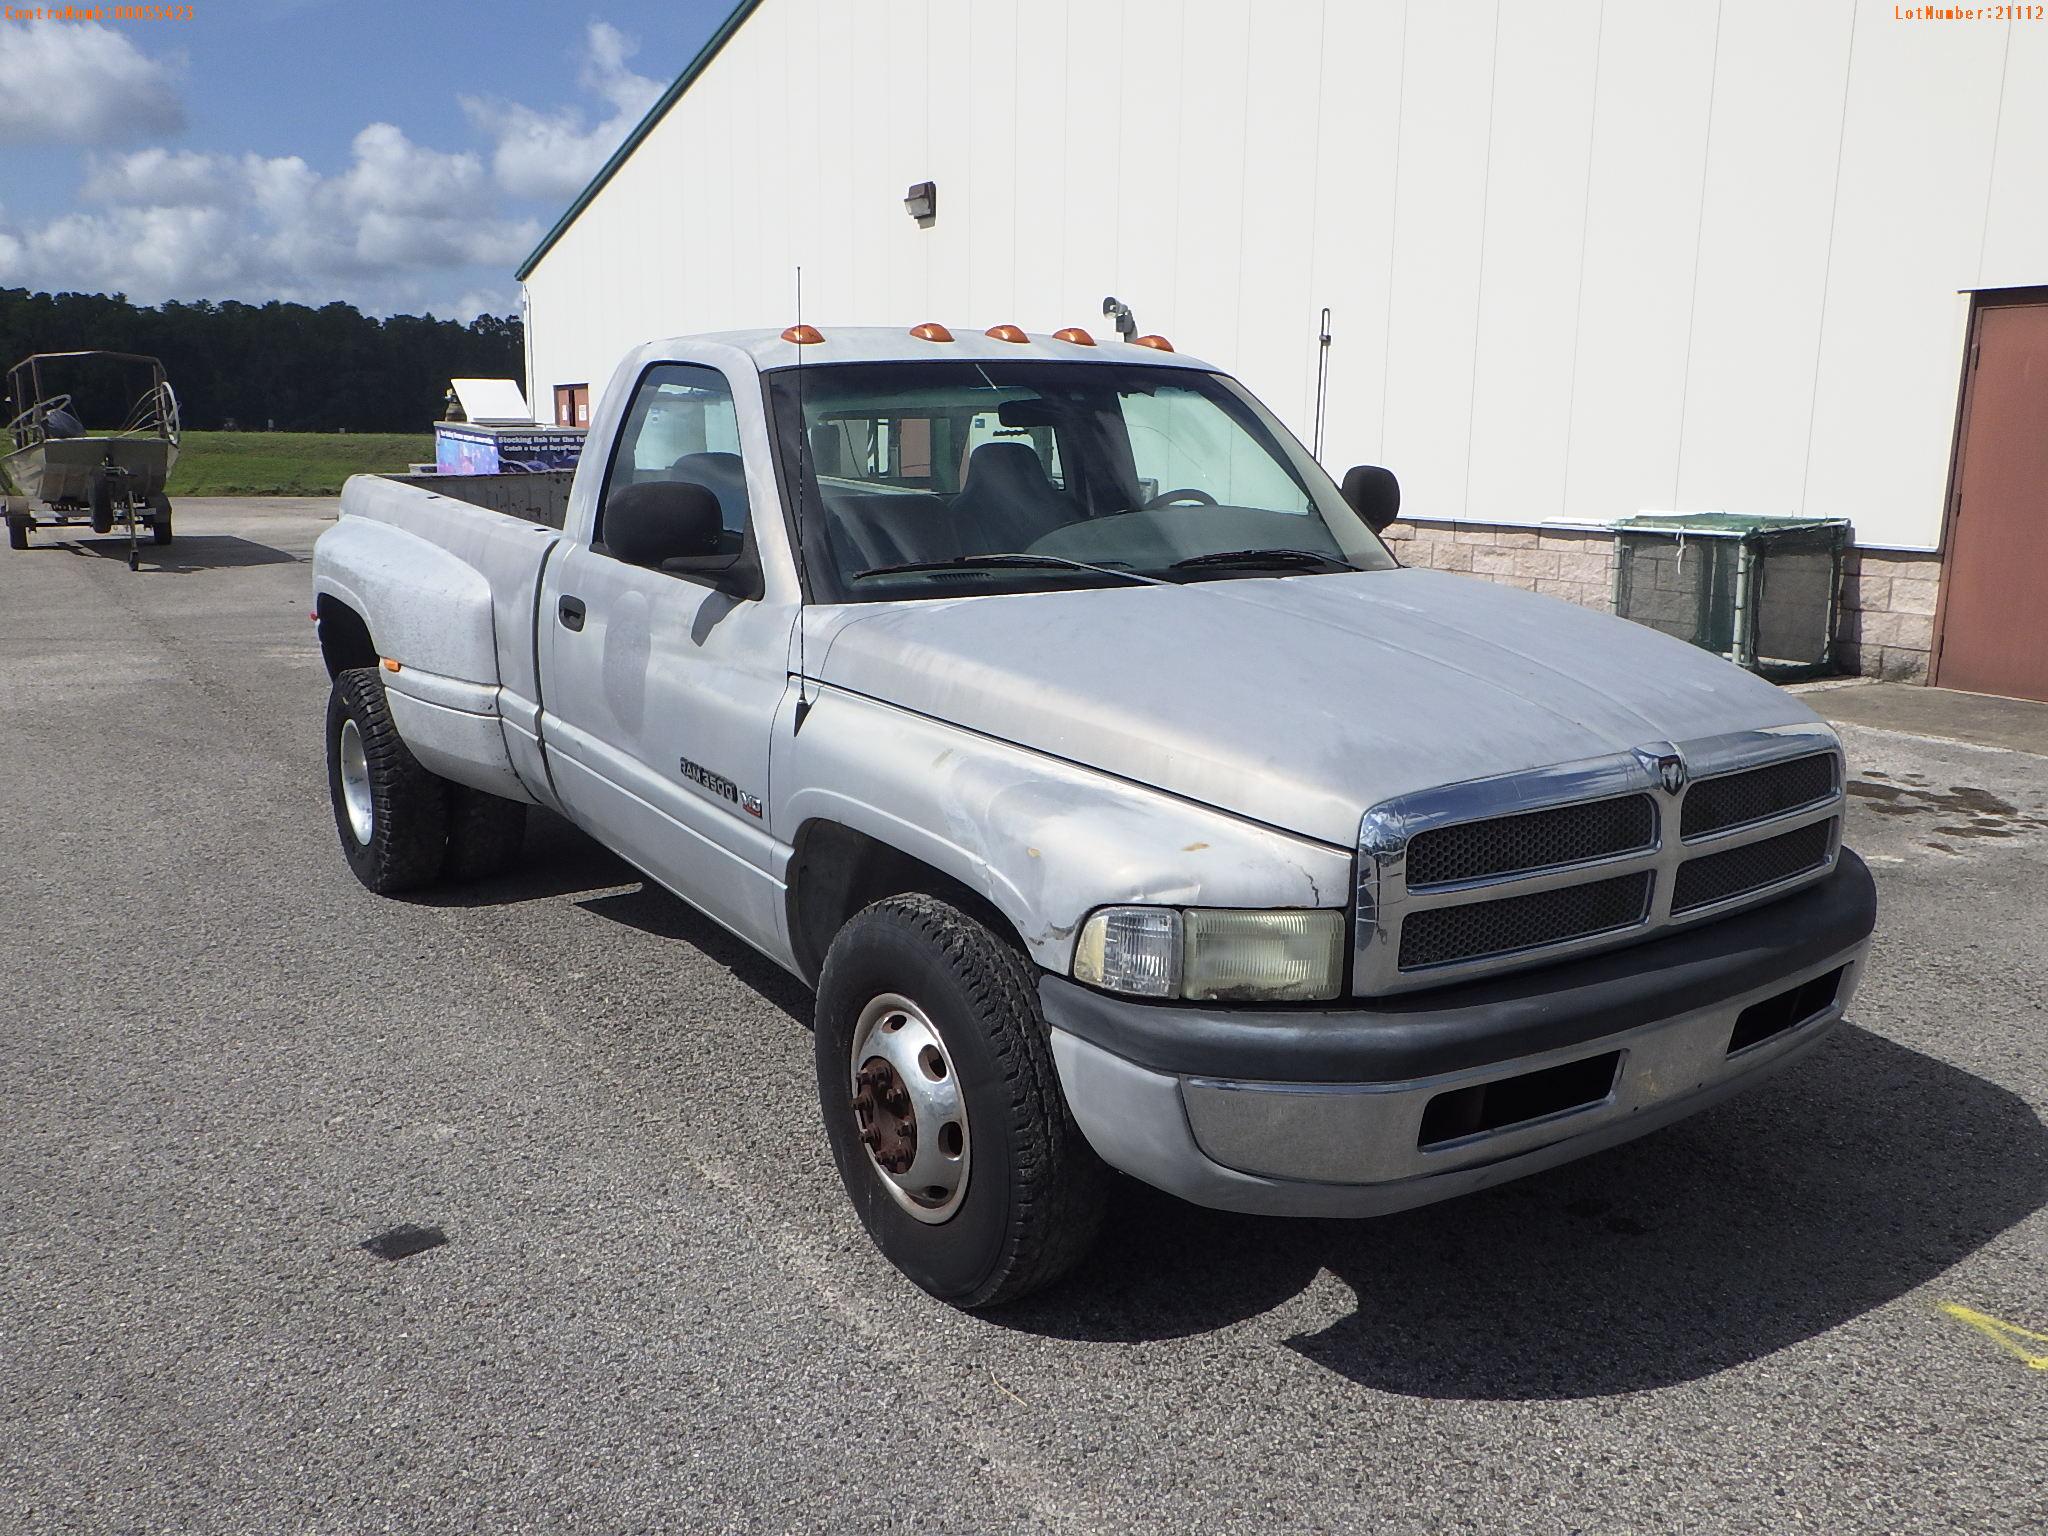 8-14110 (Trucks-Pickup 2D)  Seller: Florida State F.W.C. 2001 DODG 3500